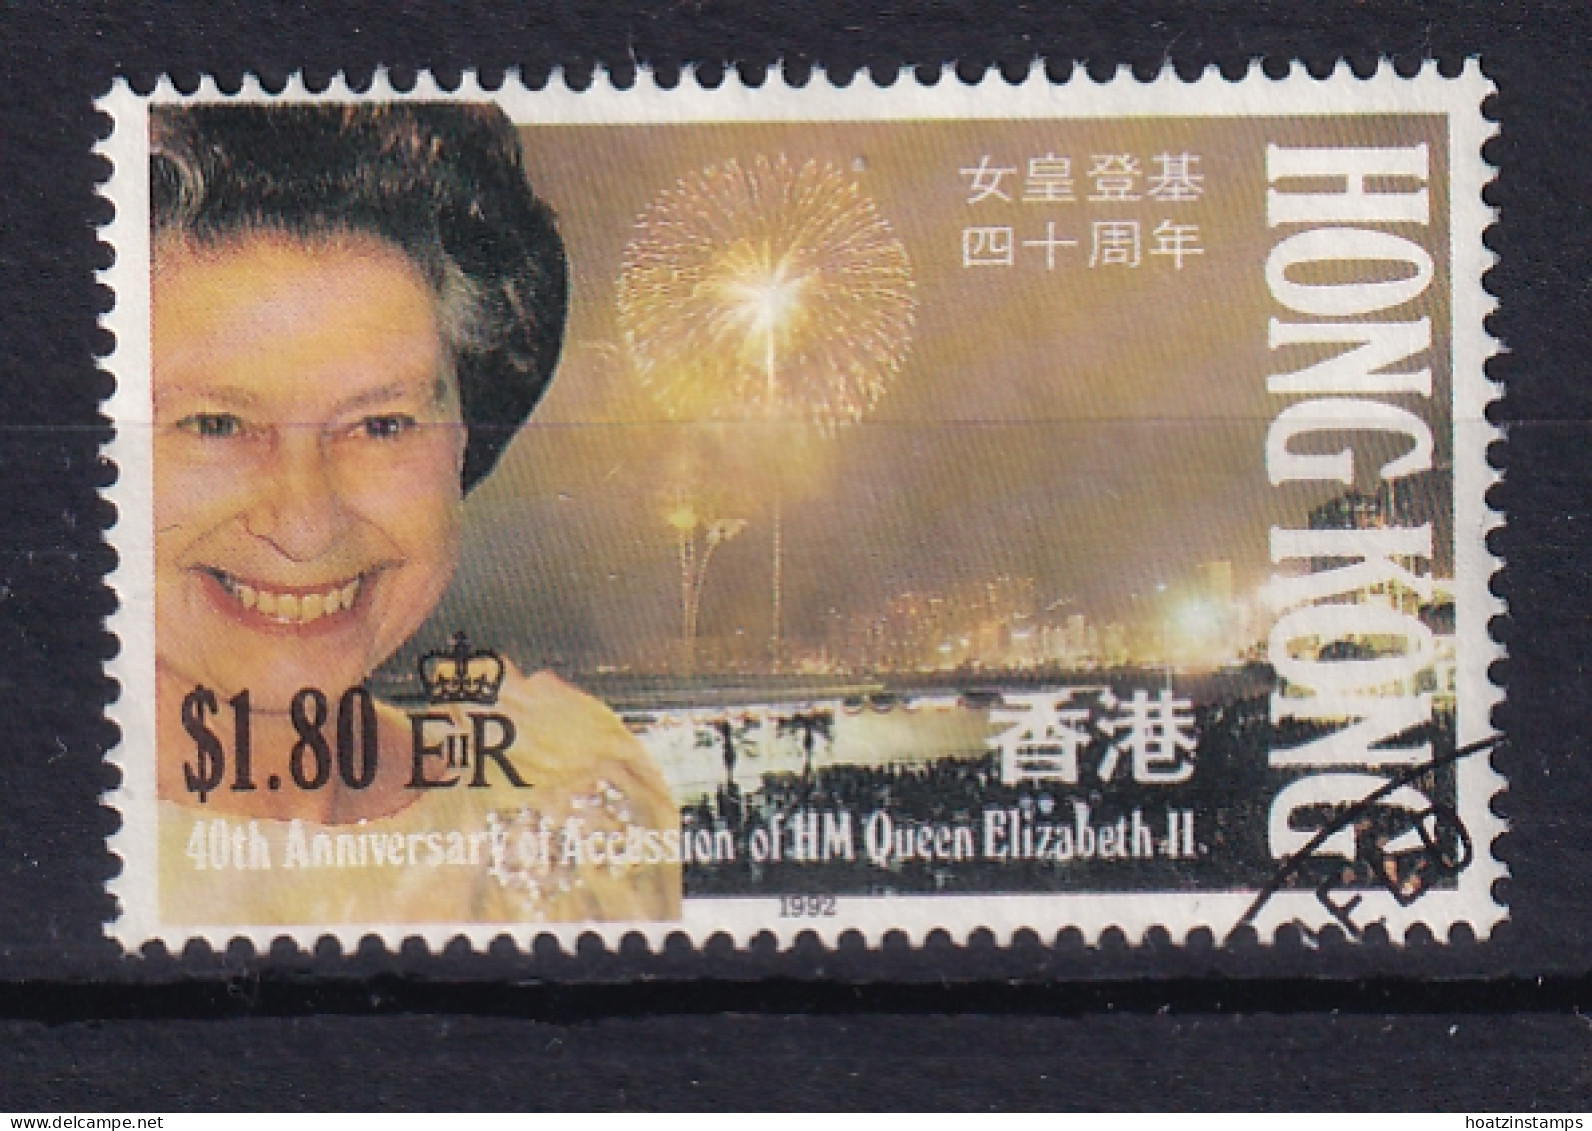 Hong Kong: 1992   40th Anniv Of QE II Accession   SG693    $1.80   Used  - Oblitérés